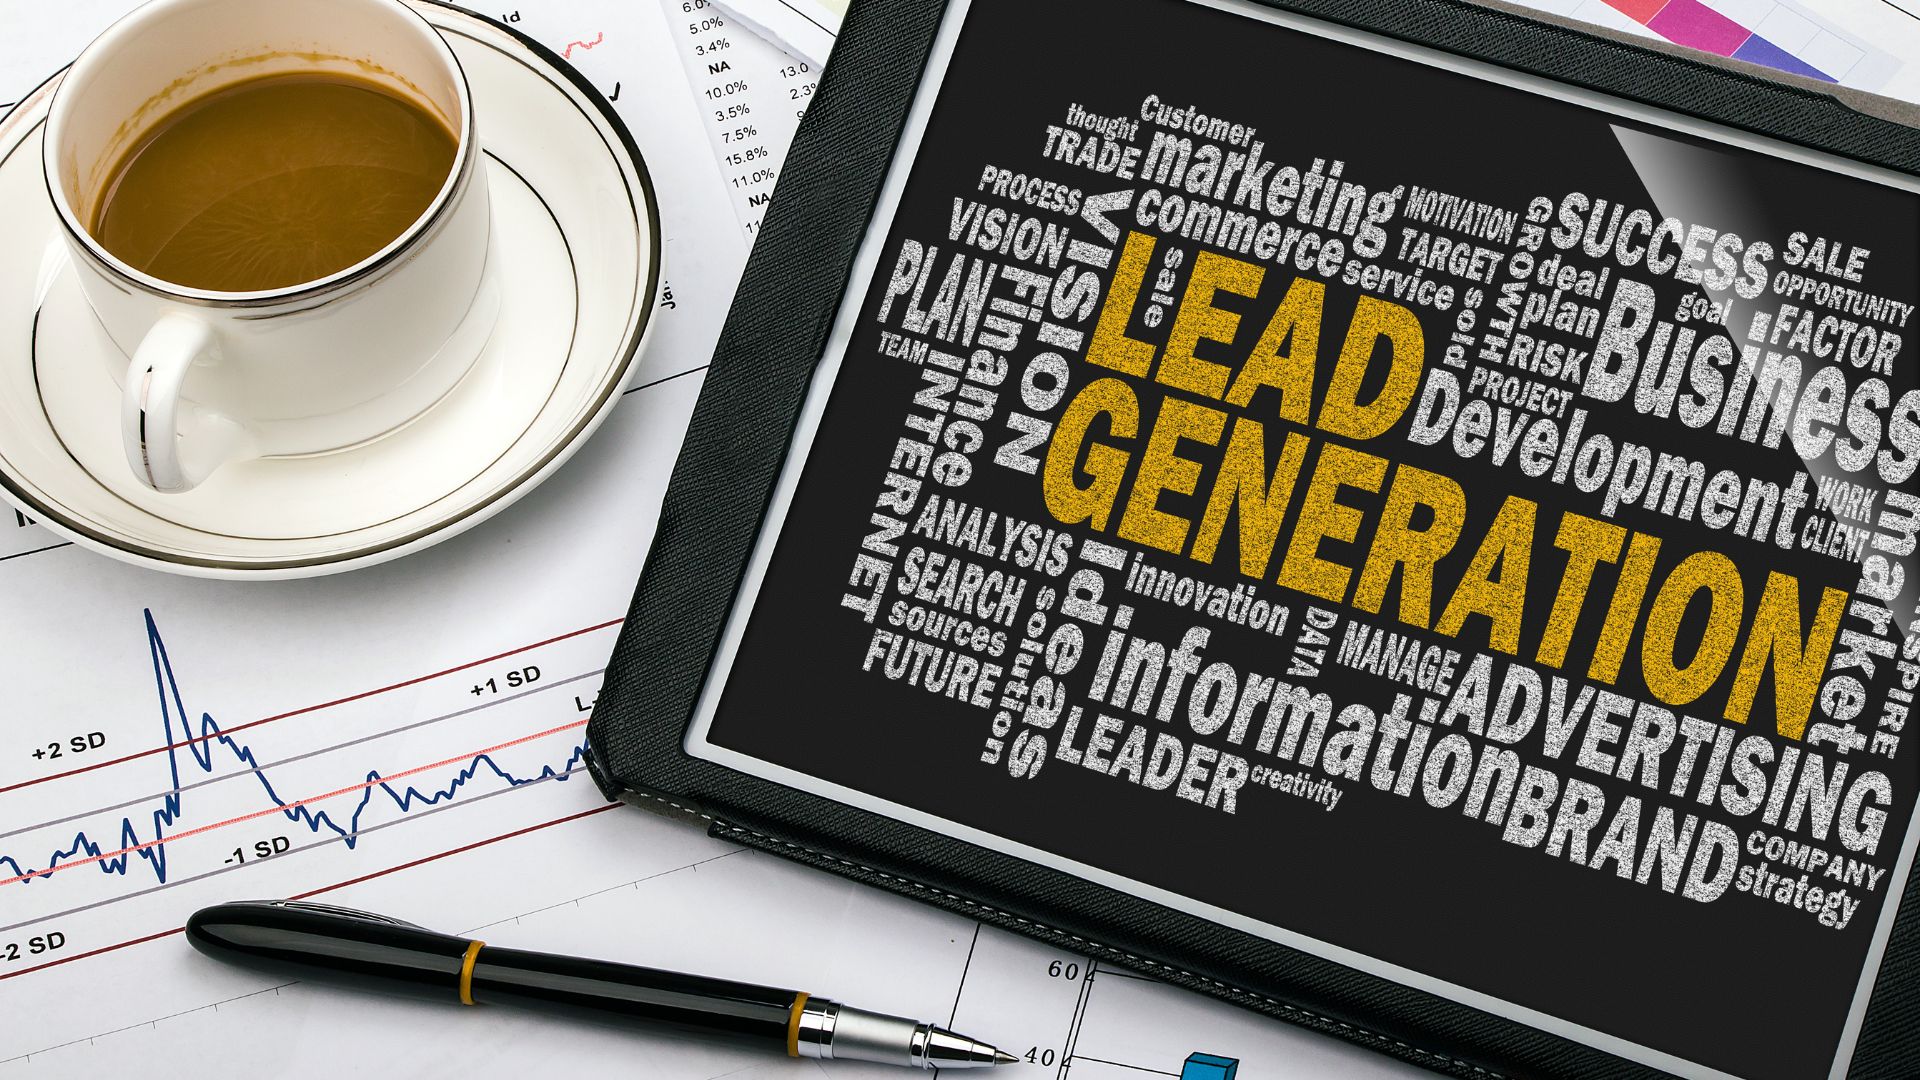 lead generation tools